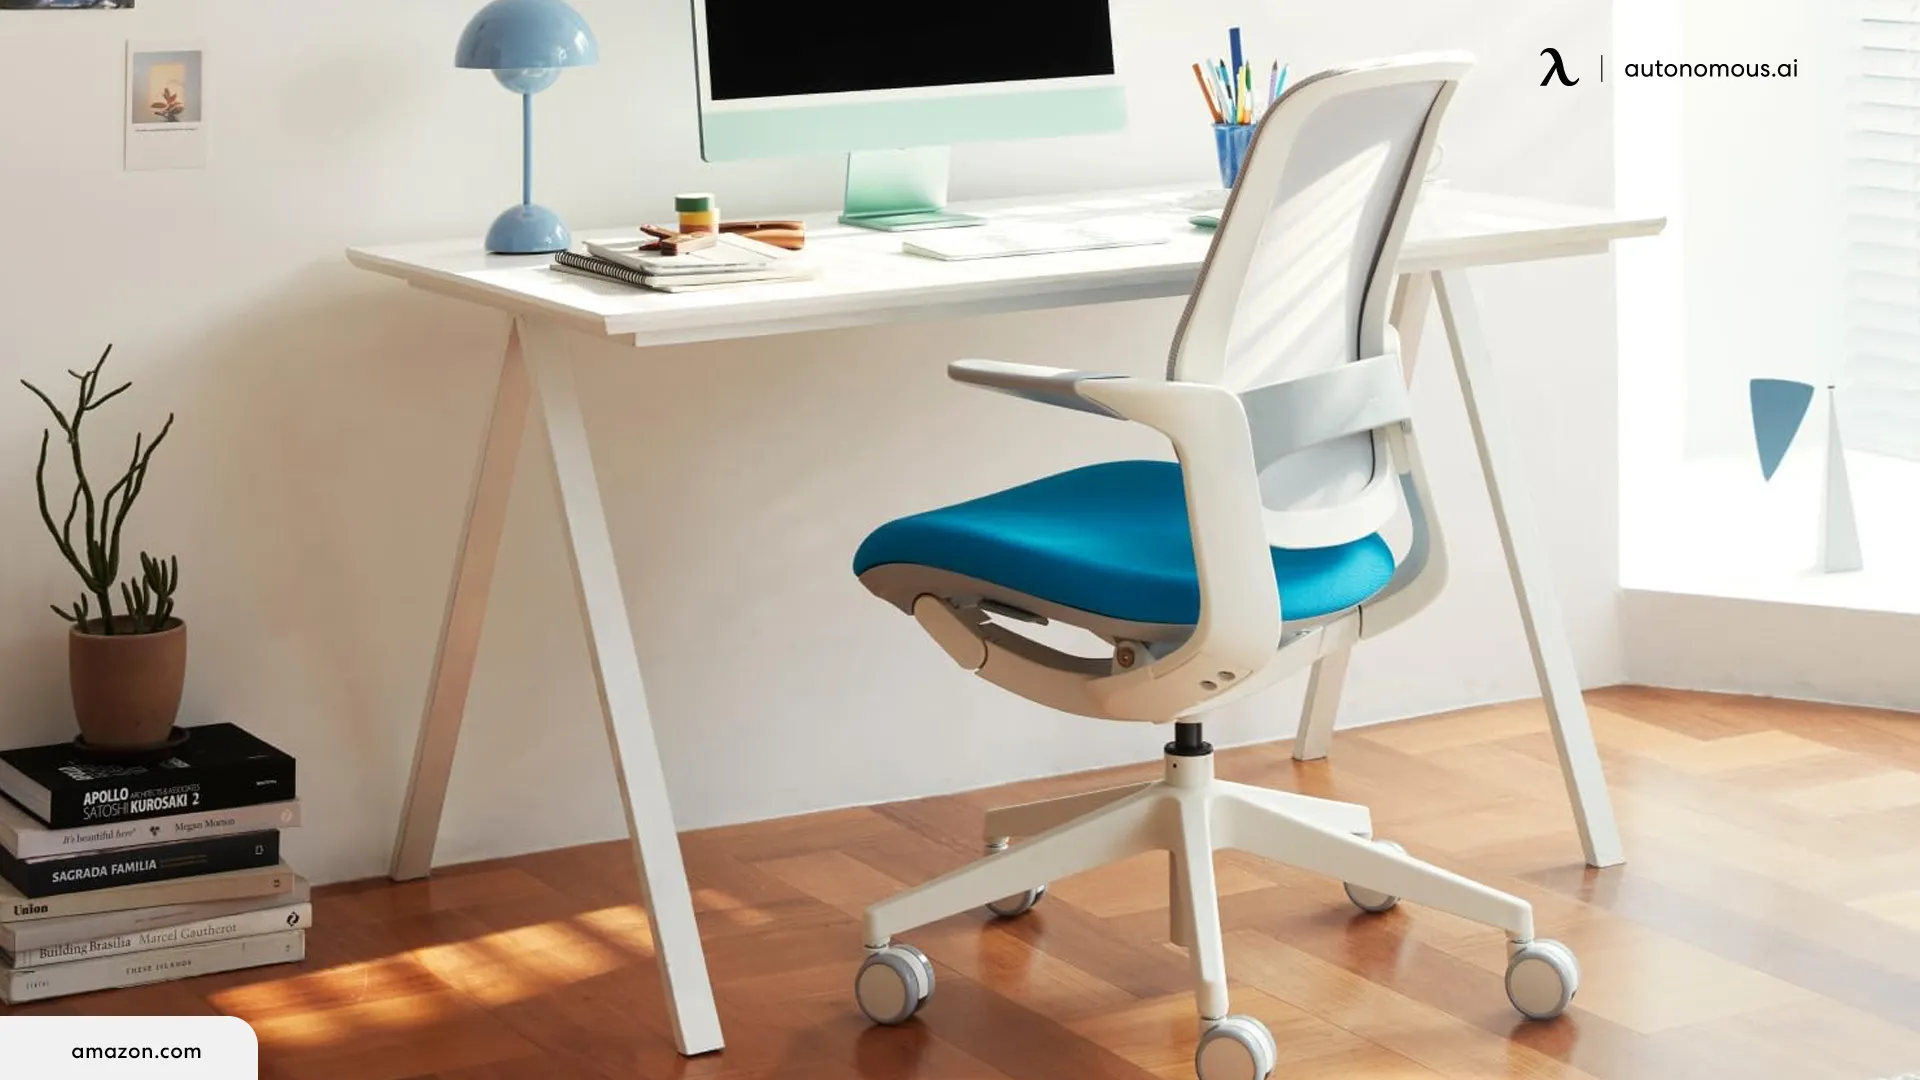 SIDIZ T25 office chair for petite women